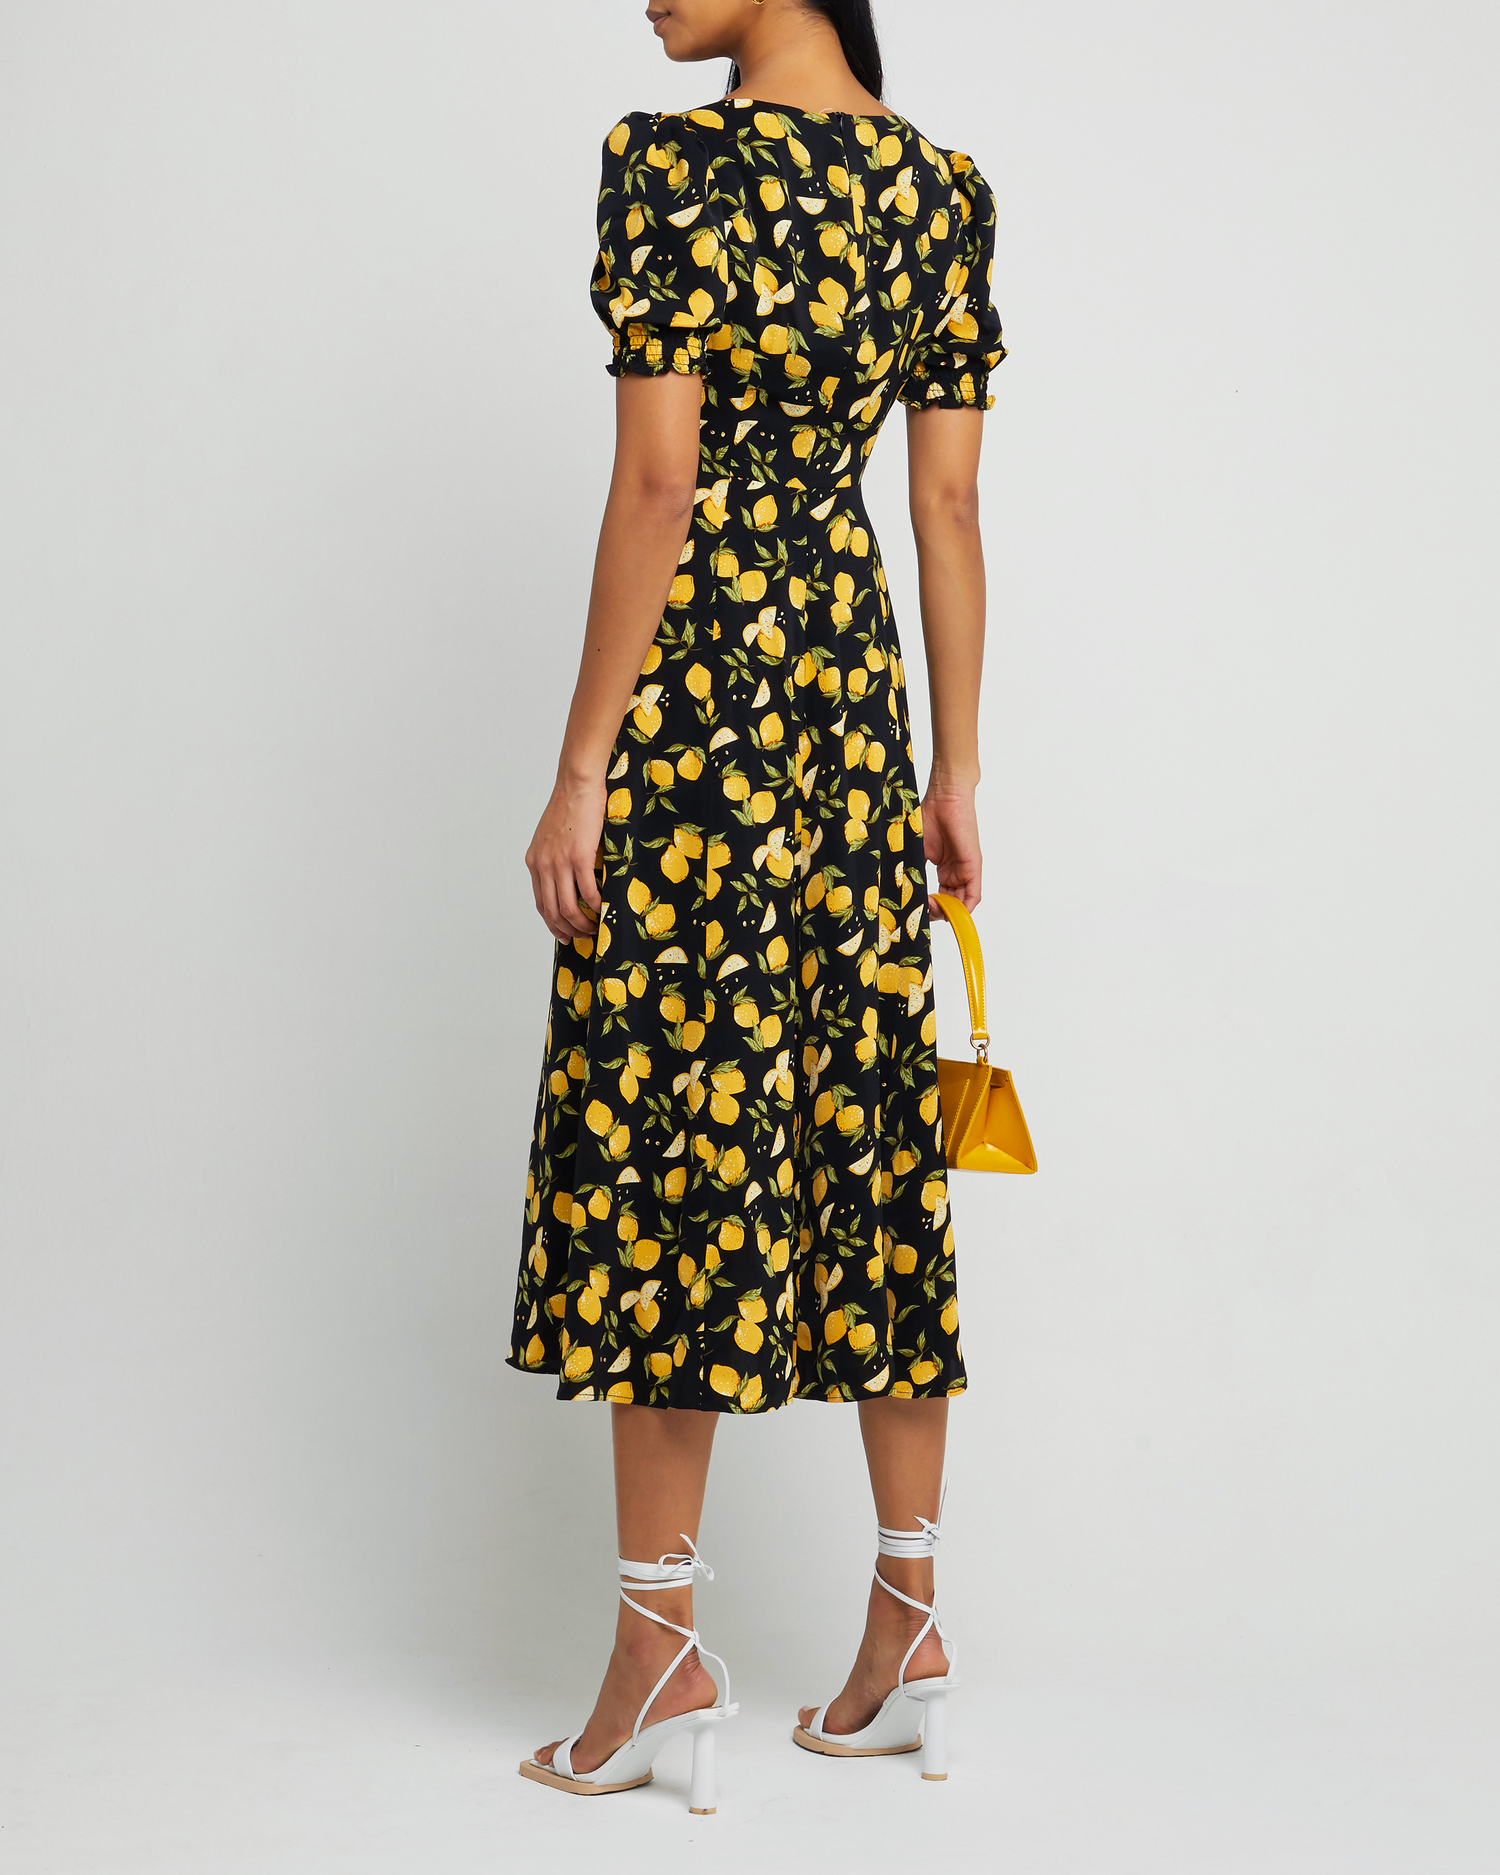 Second image of Melanie Dress, a black midi dress, side skirt slit, yellow lemon print, short sleeves, puff sleeves, cap sleeves, sweetheart neckline